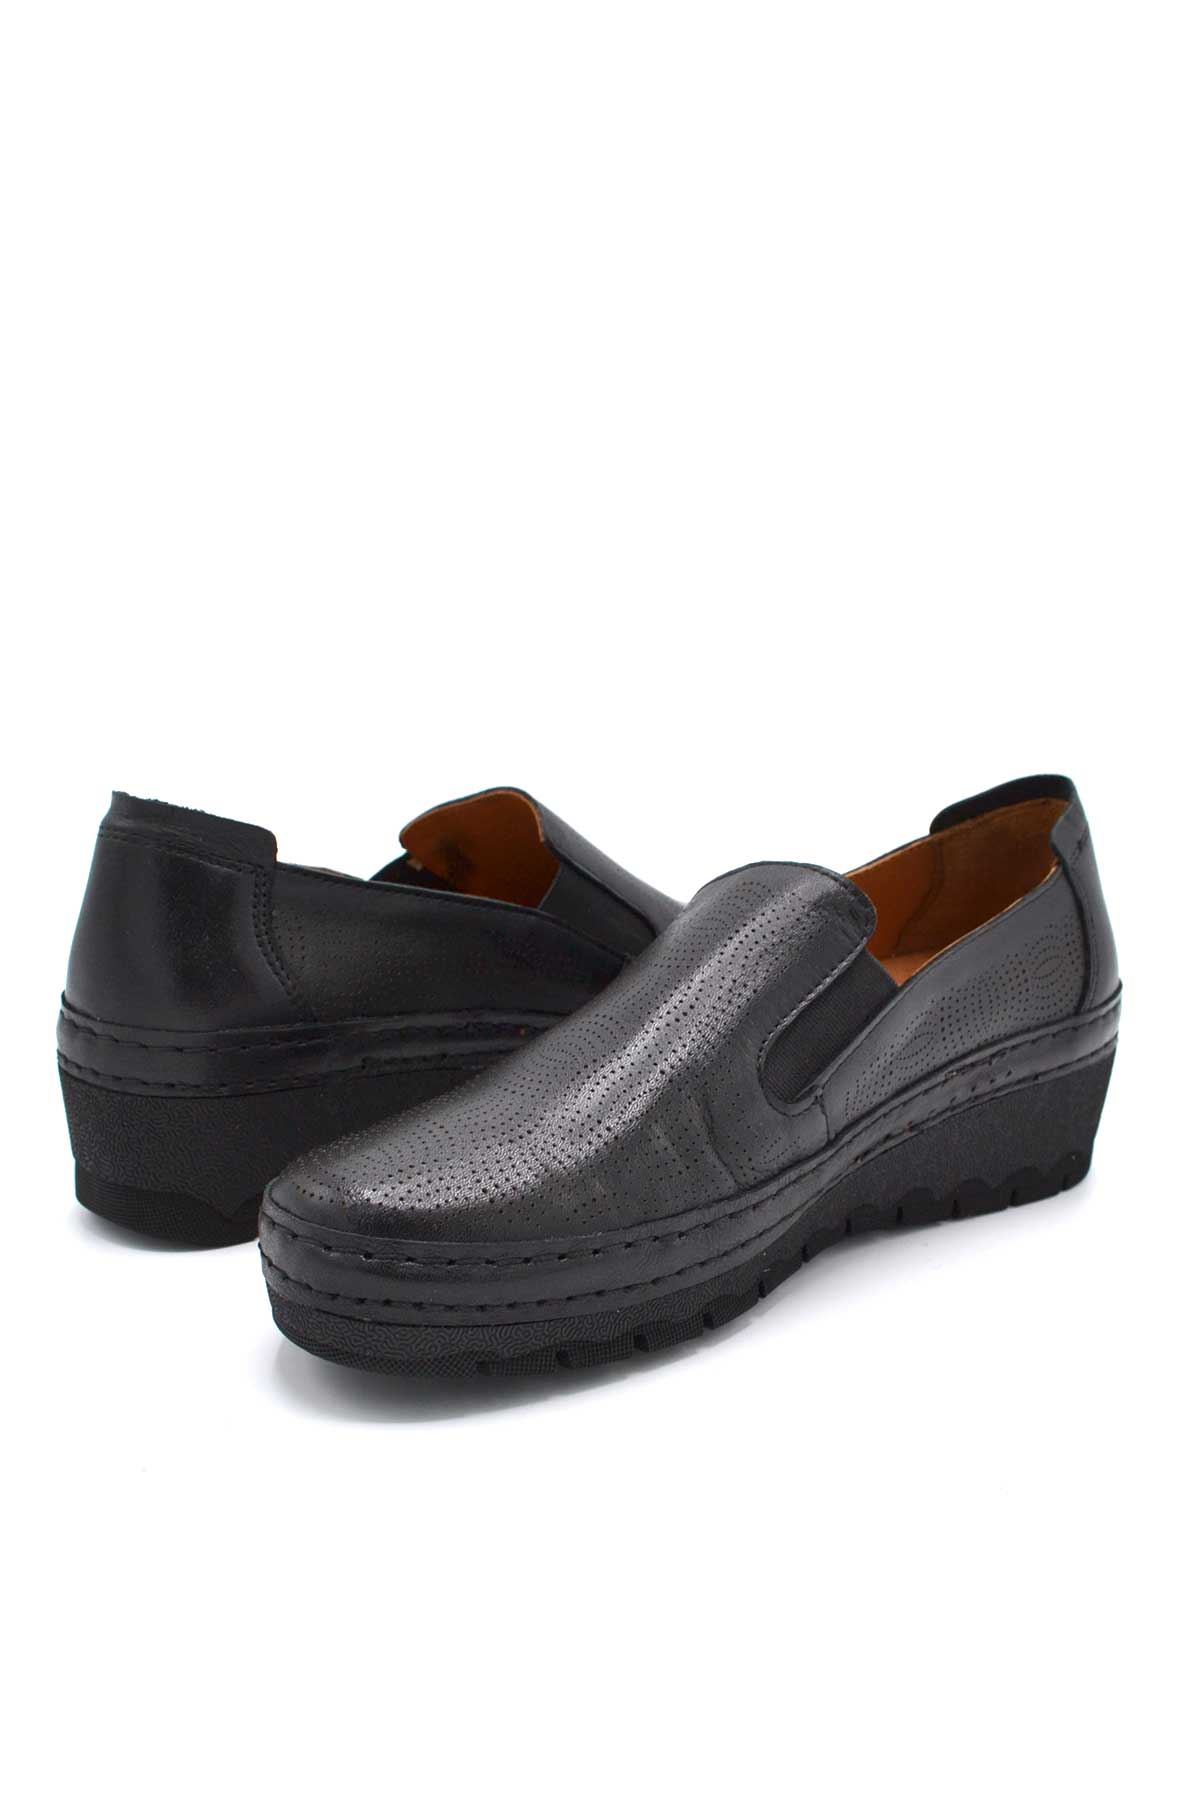 Kadın Casual Deri Sneakers Siyah 2213501Y - Thumbnail